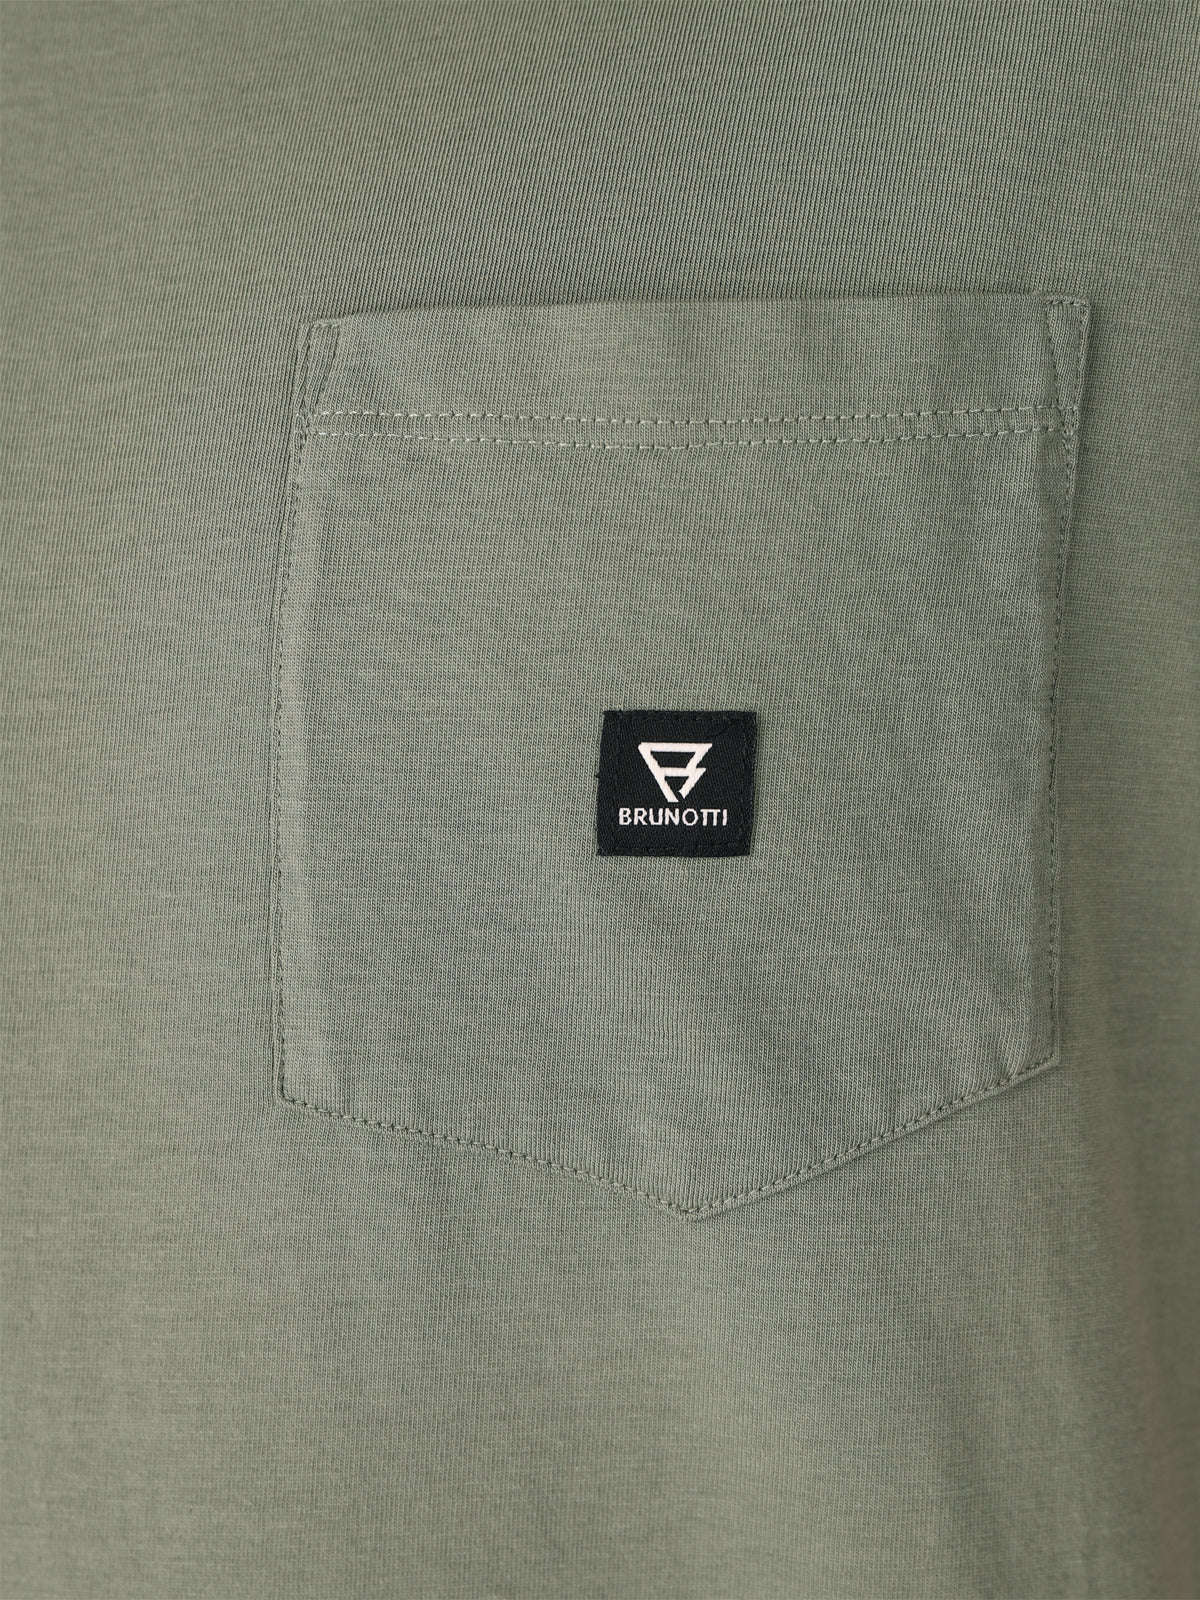 Axle-N Men T-Shirt | Green